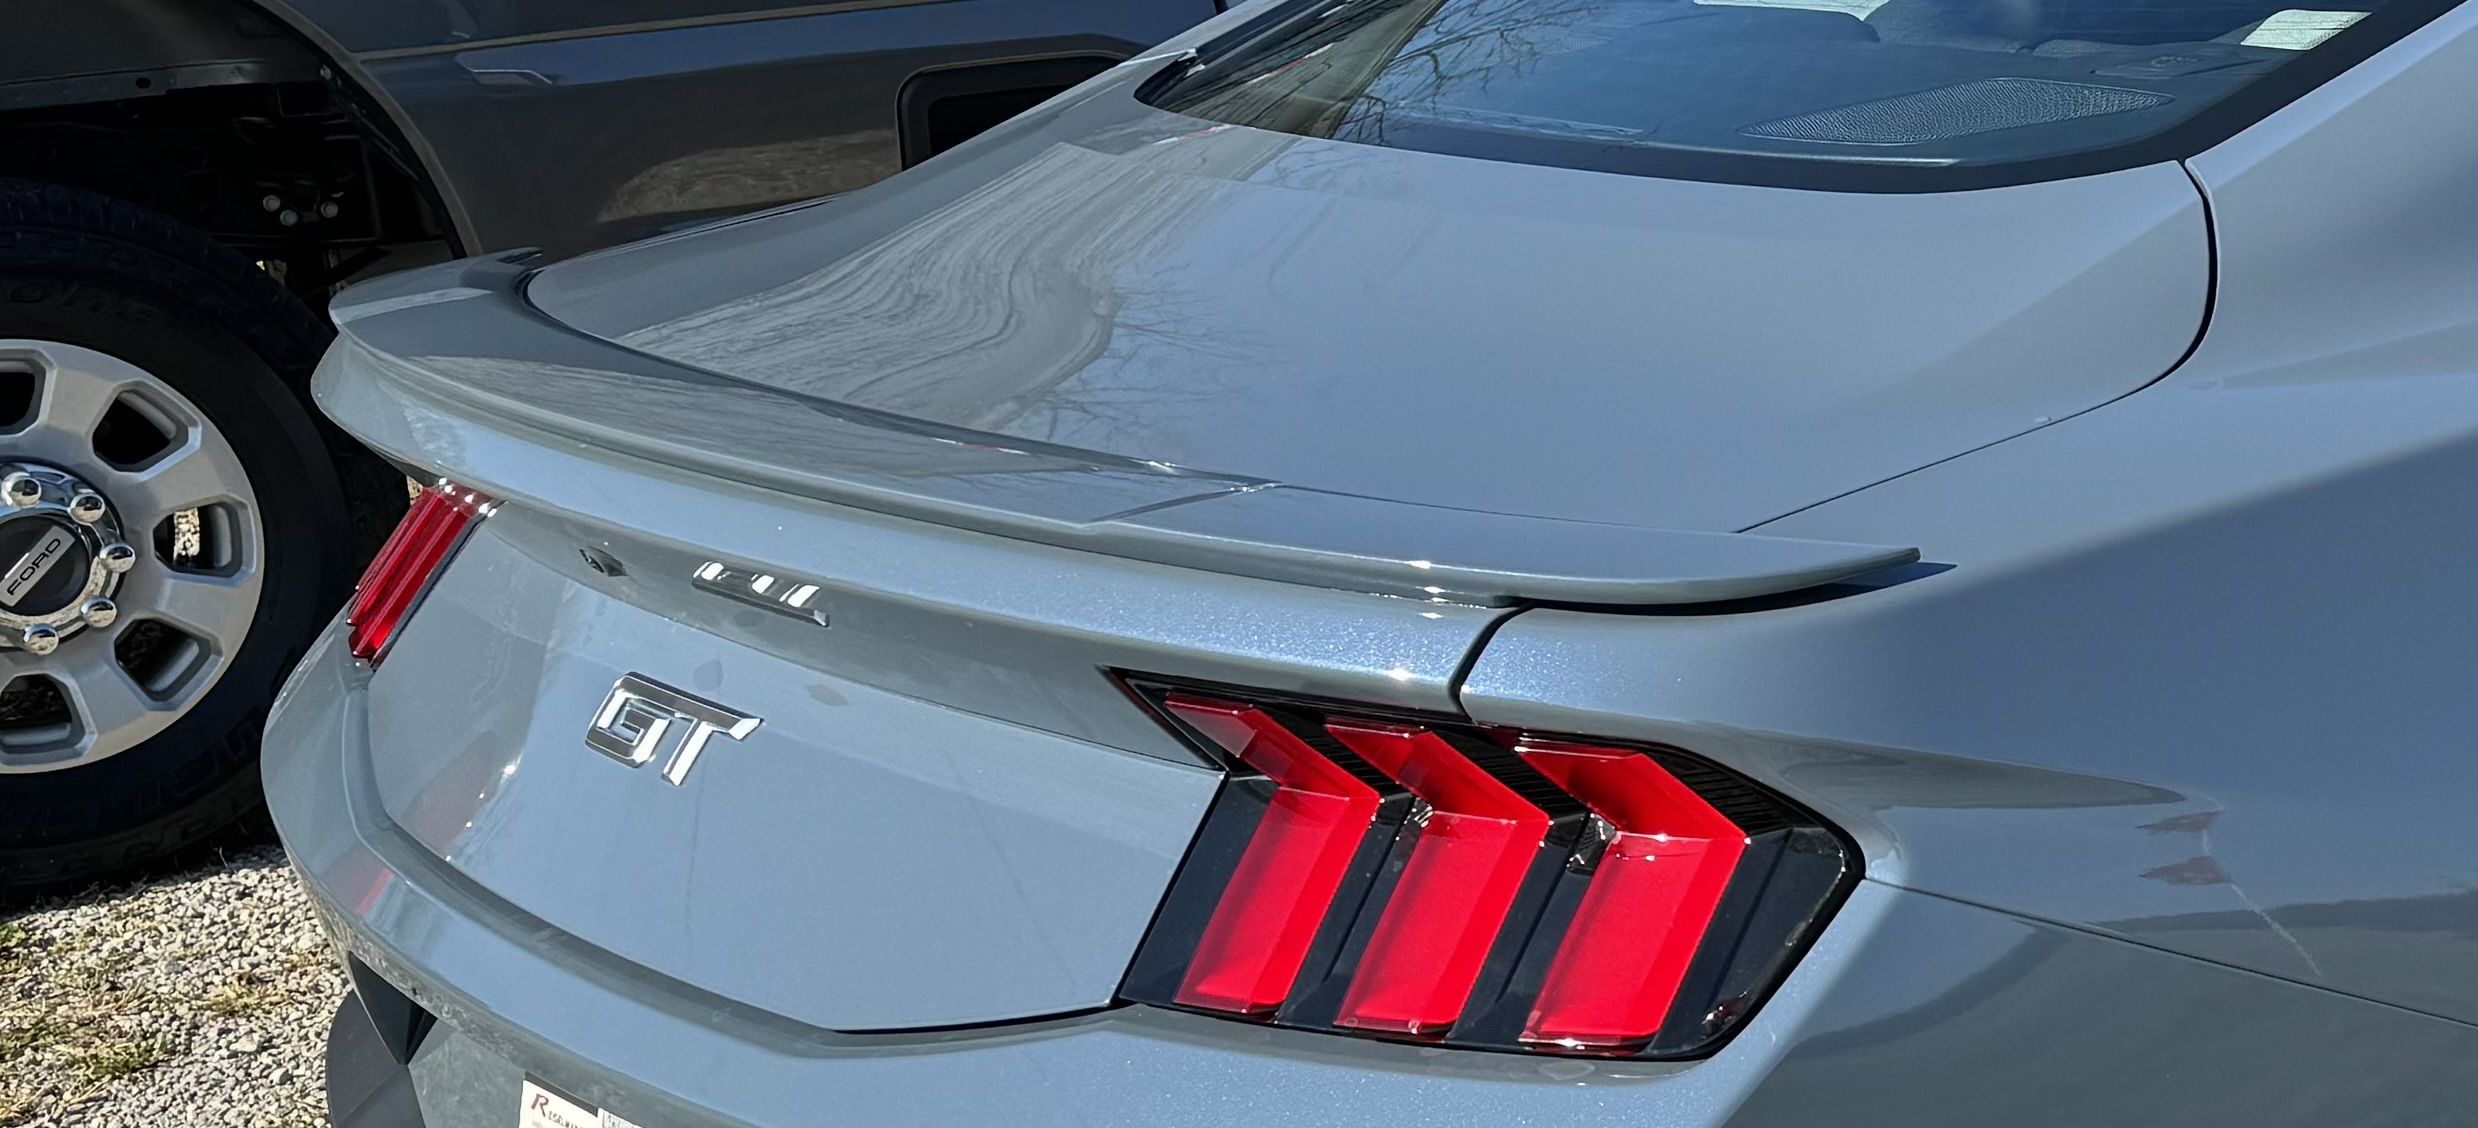 S650 Mustang Vapor Blue “Spoiler Delete” Rear Decklid - trade for mine with deck mount spoiler? IMG_0465